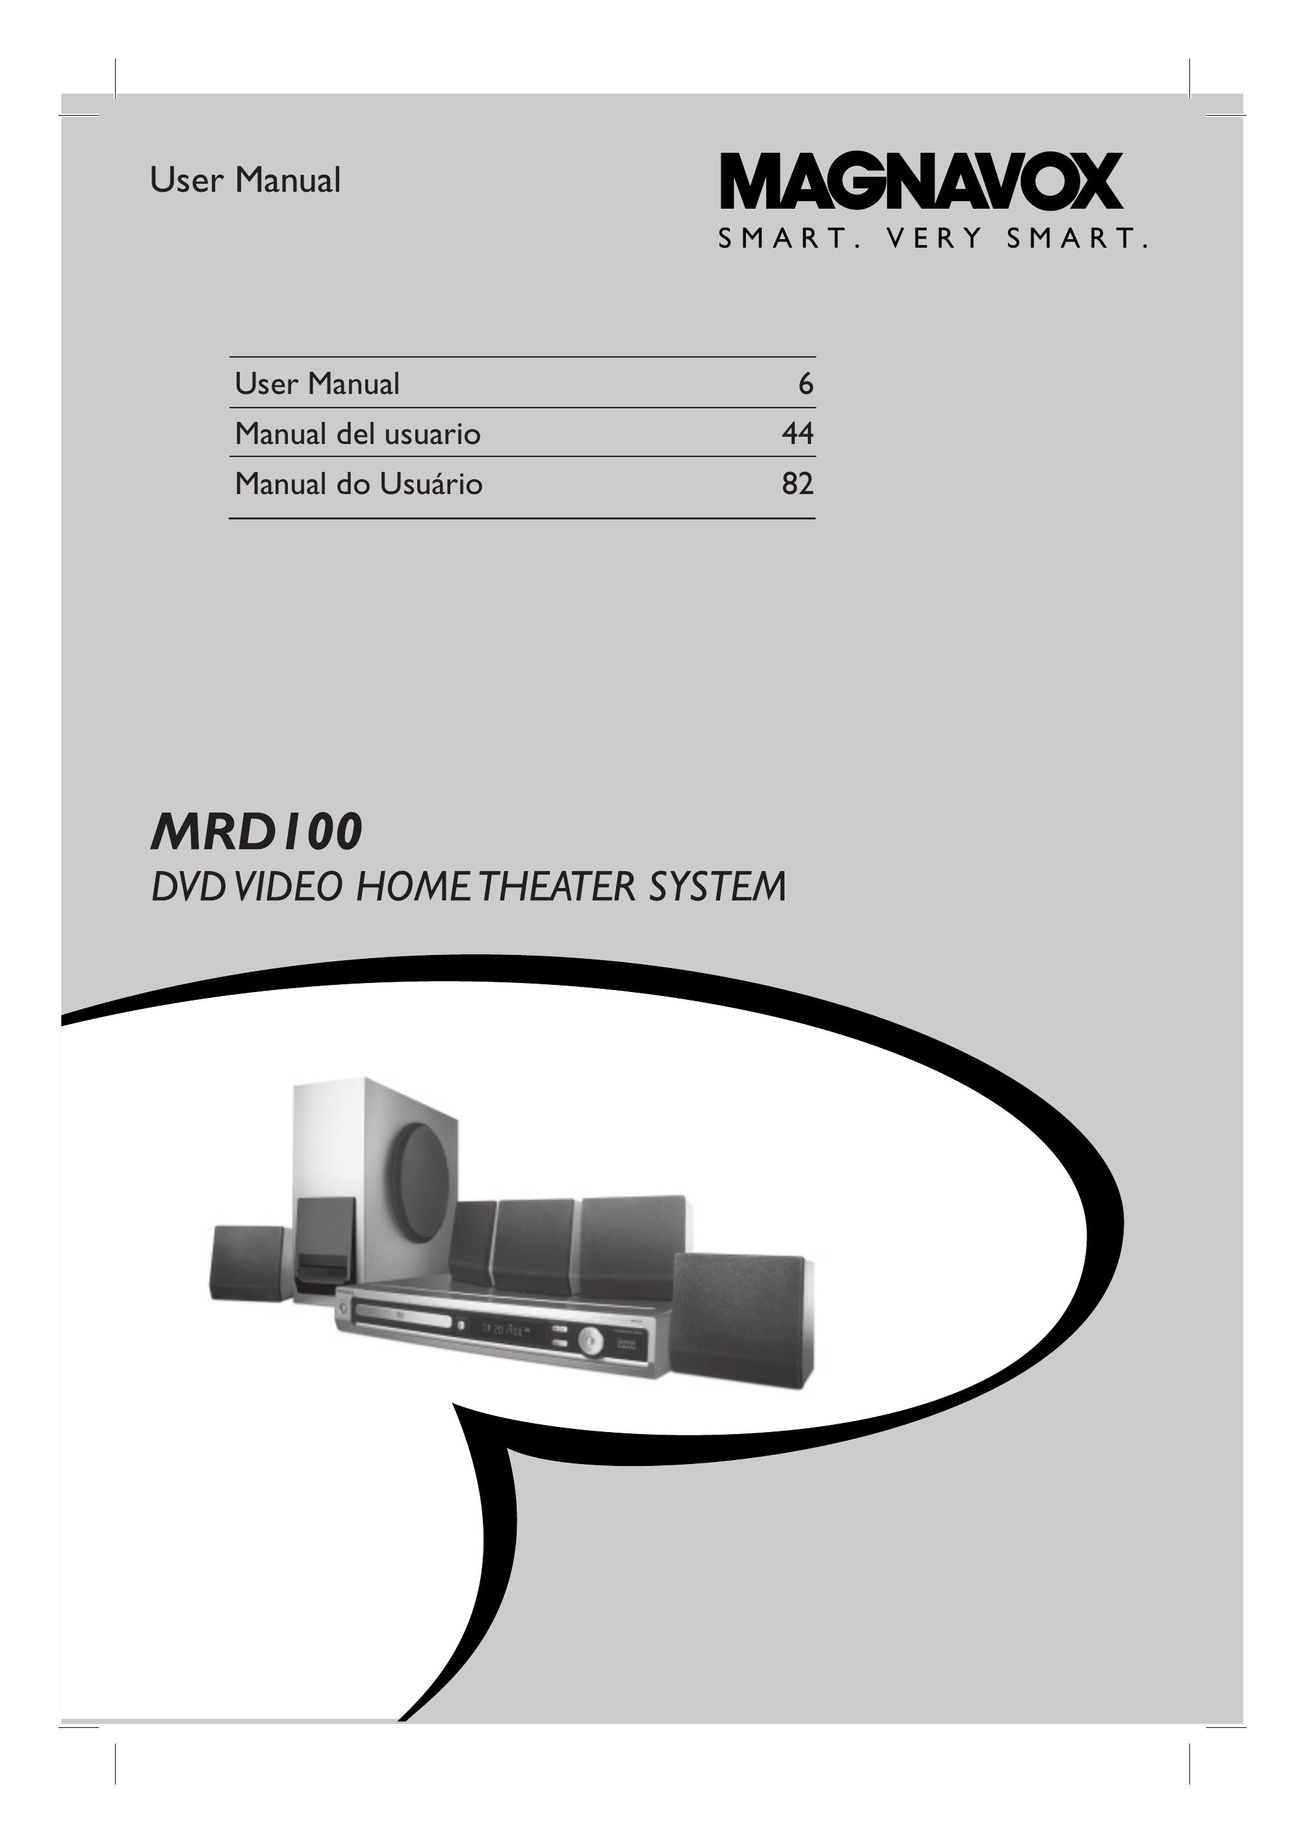 Magnavox MRD100 Home Theater System User Manual